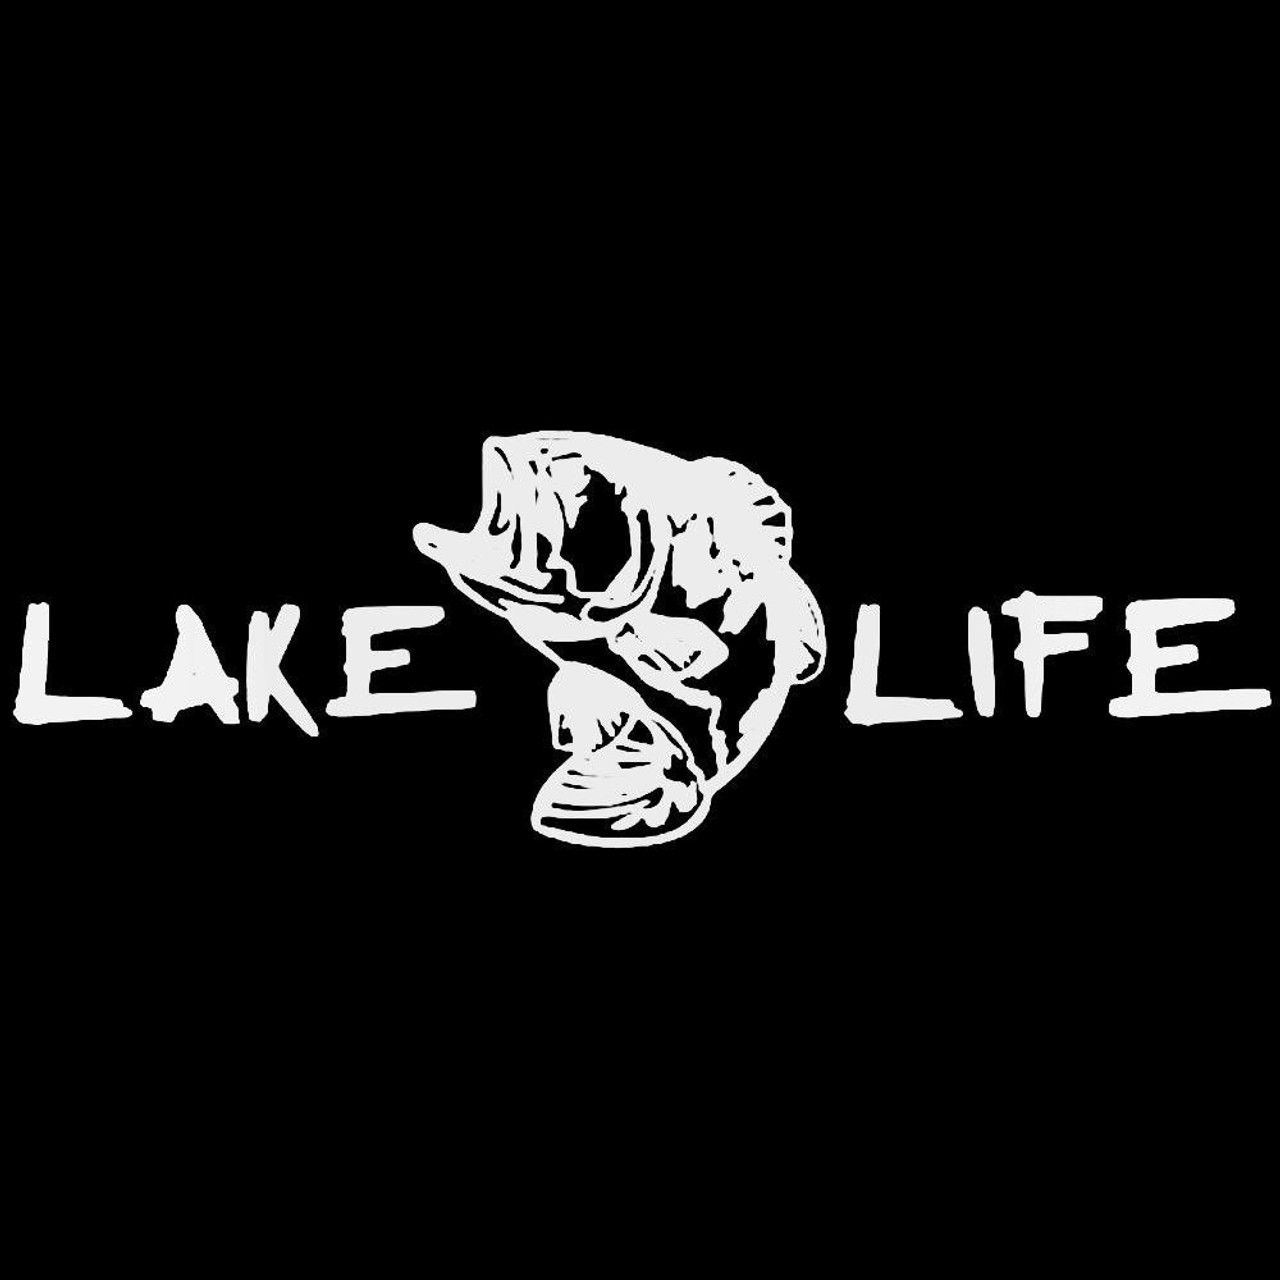 Lake Life Bass Fish Fishing 2 Vinyl Decal Sticker